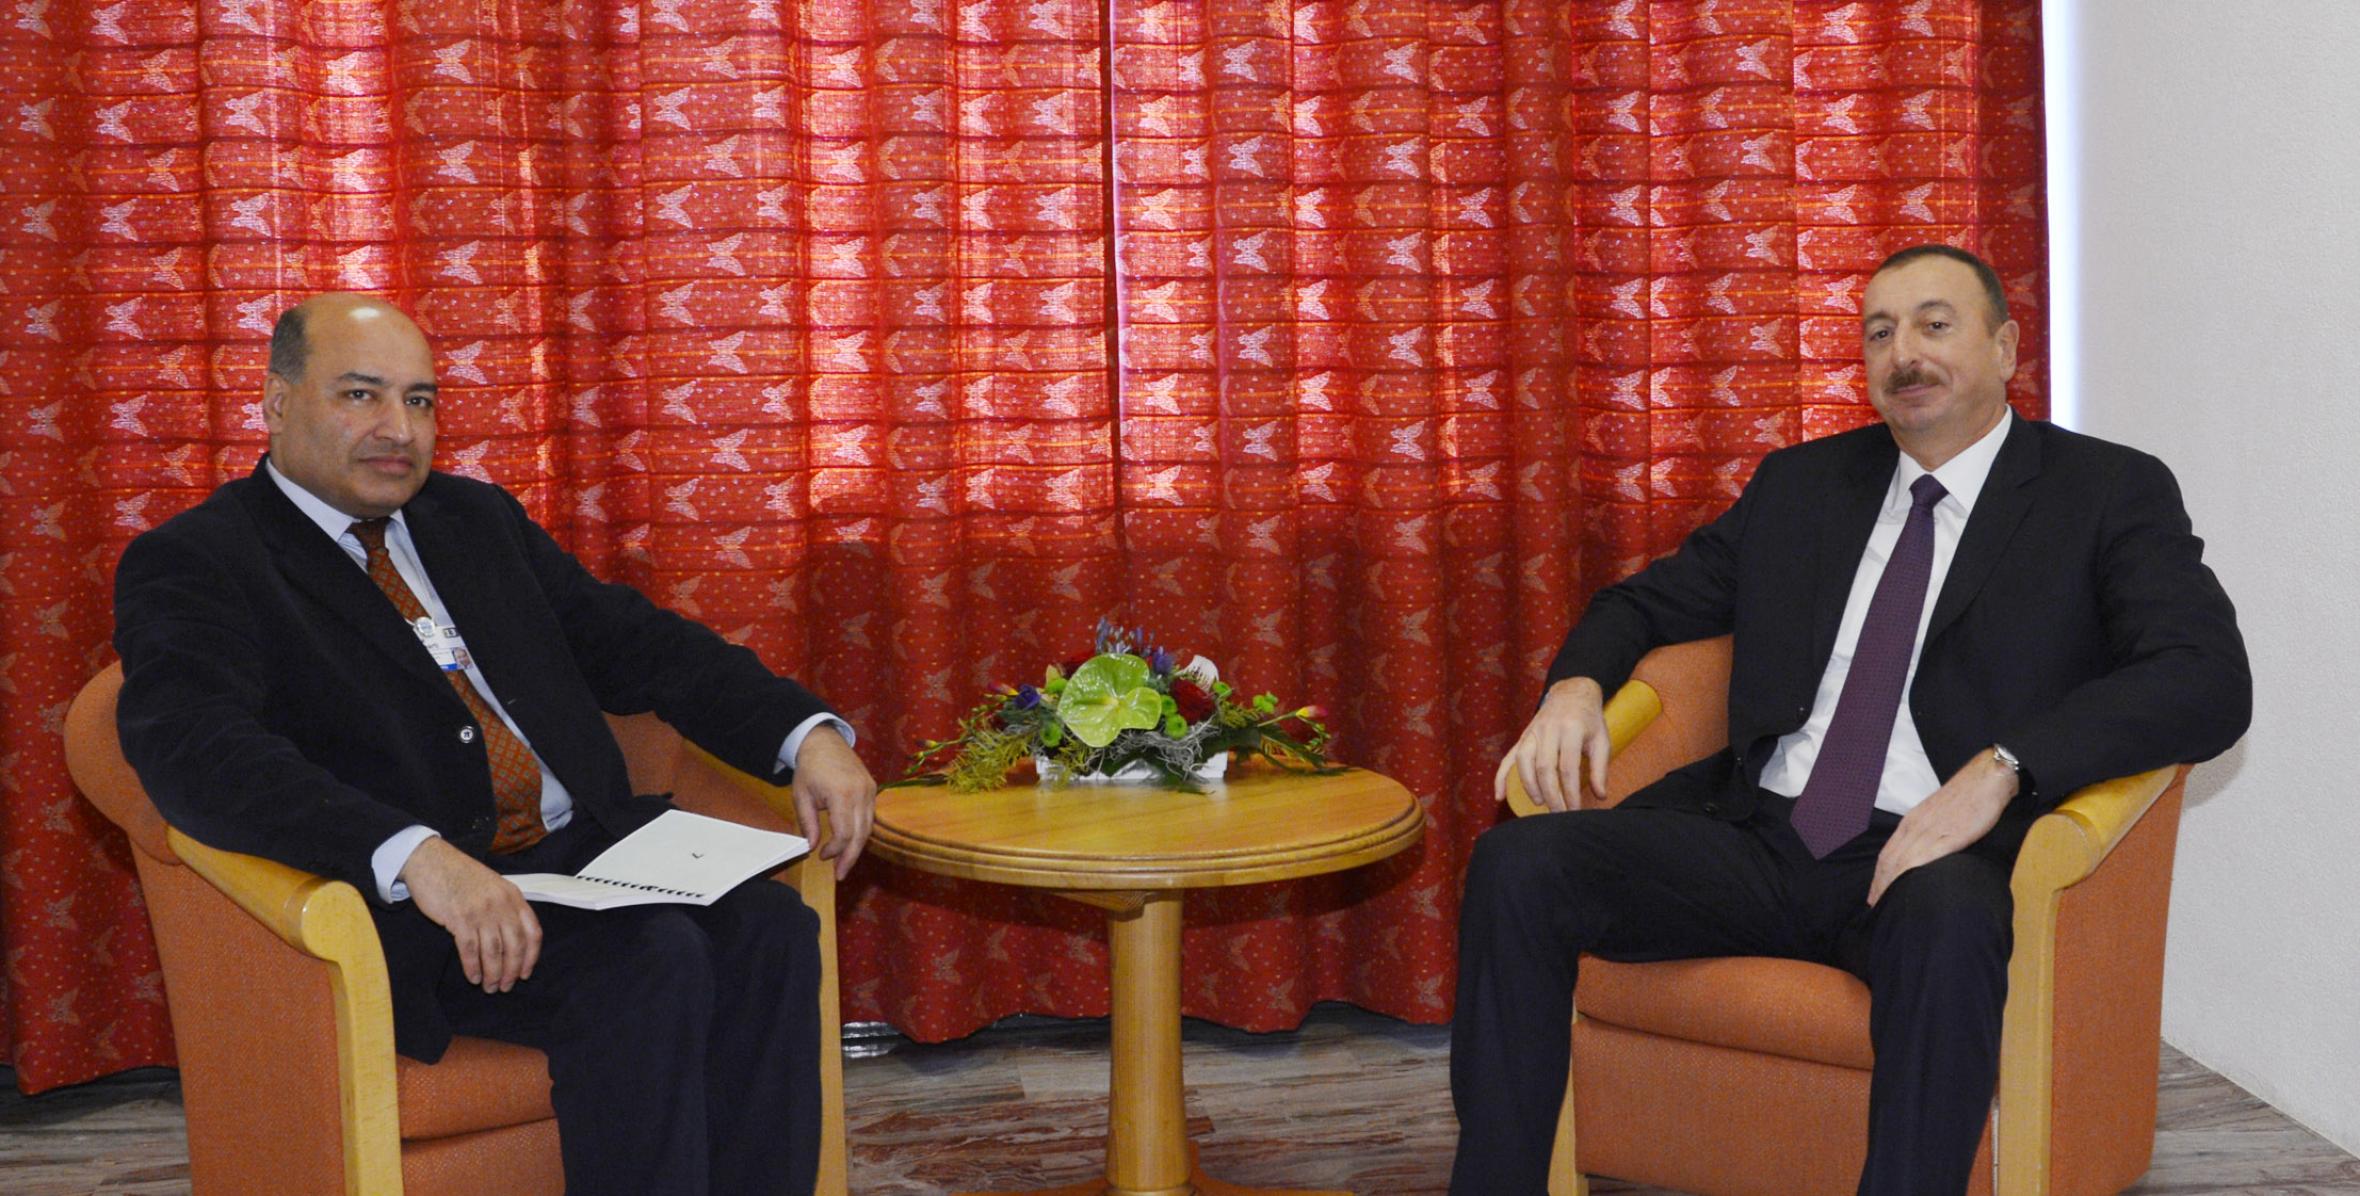 Ilham Aliyev met with President of the European Bank for Reconstruction and Development (EBRD) Suma Chakrabarti